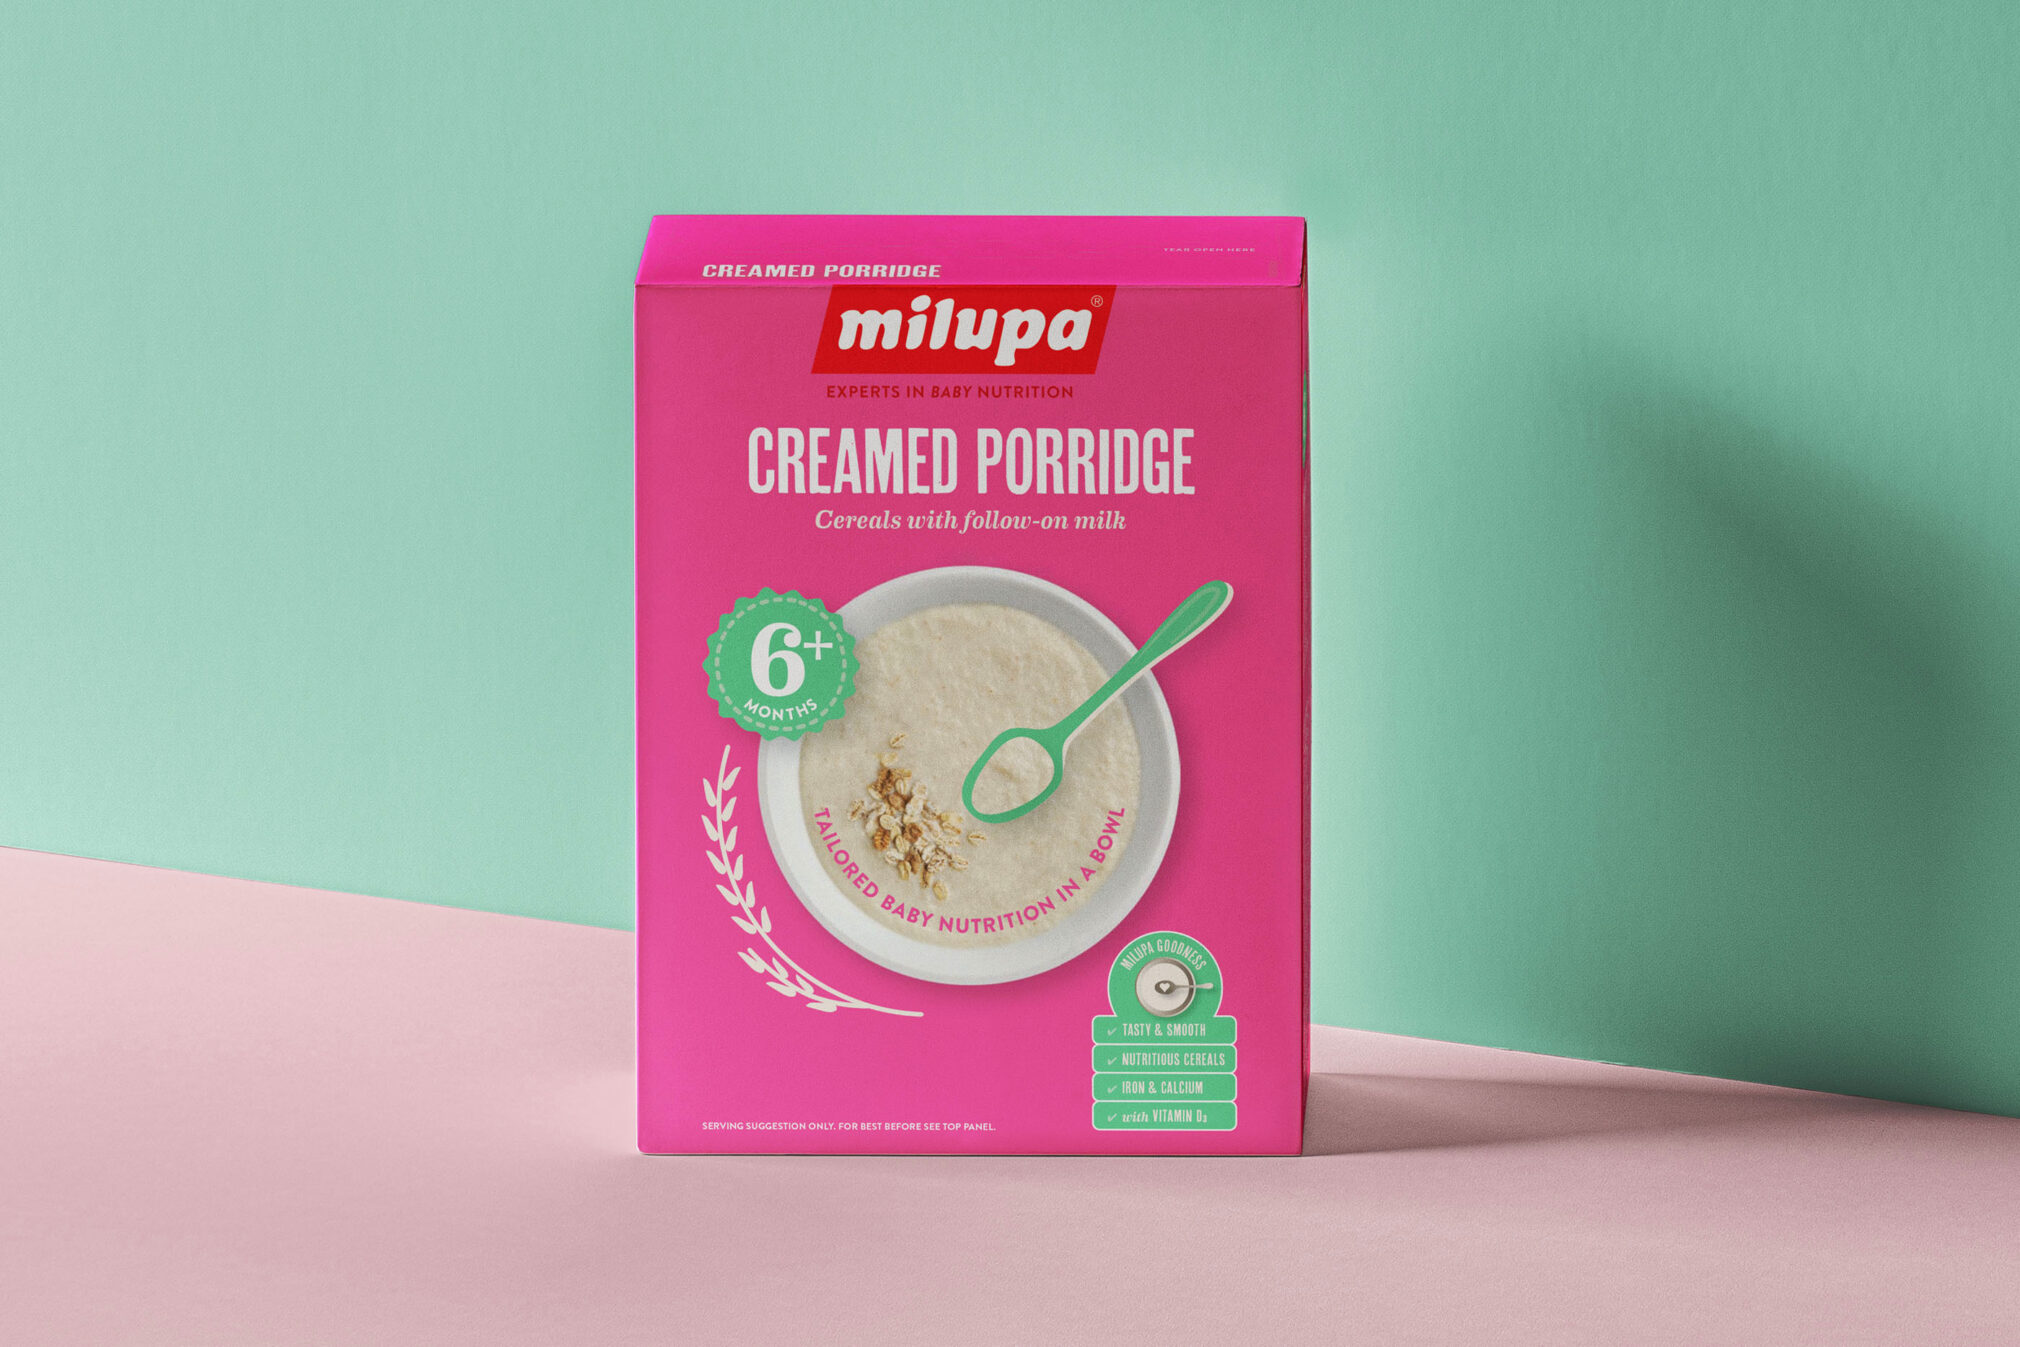 Milupa creamed porridge